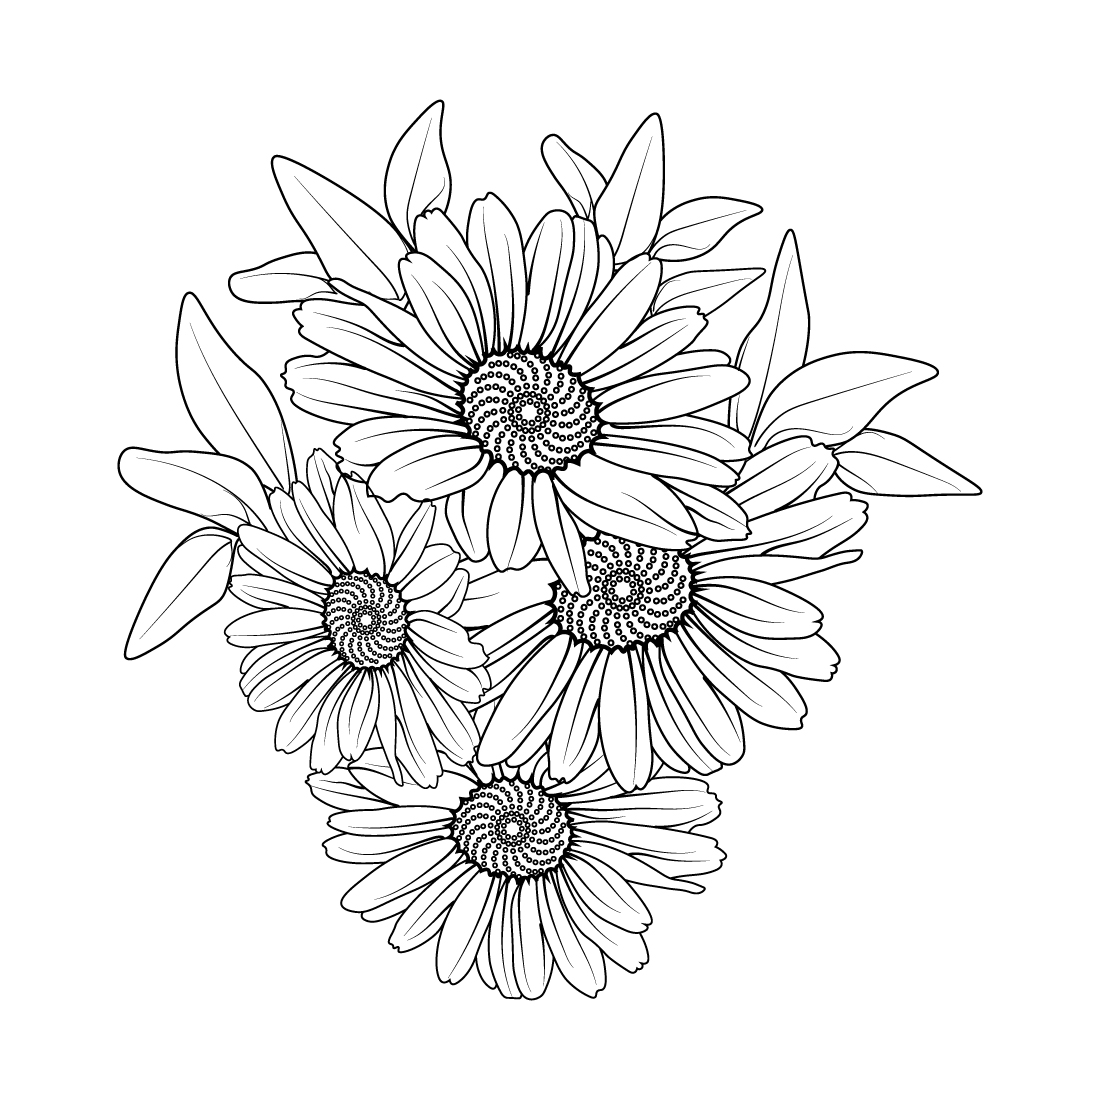 Daisy flwoer line art, daisy floewr line art bouquet, gerbara daisy drawing preview image.